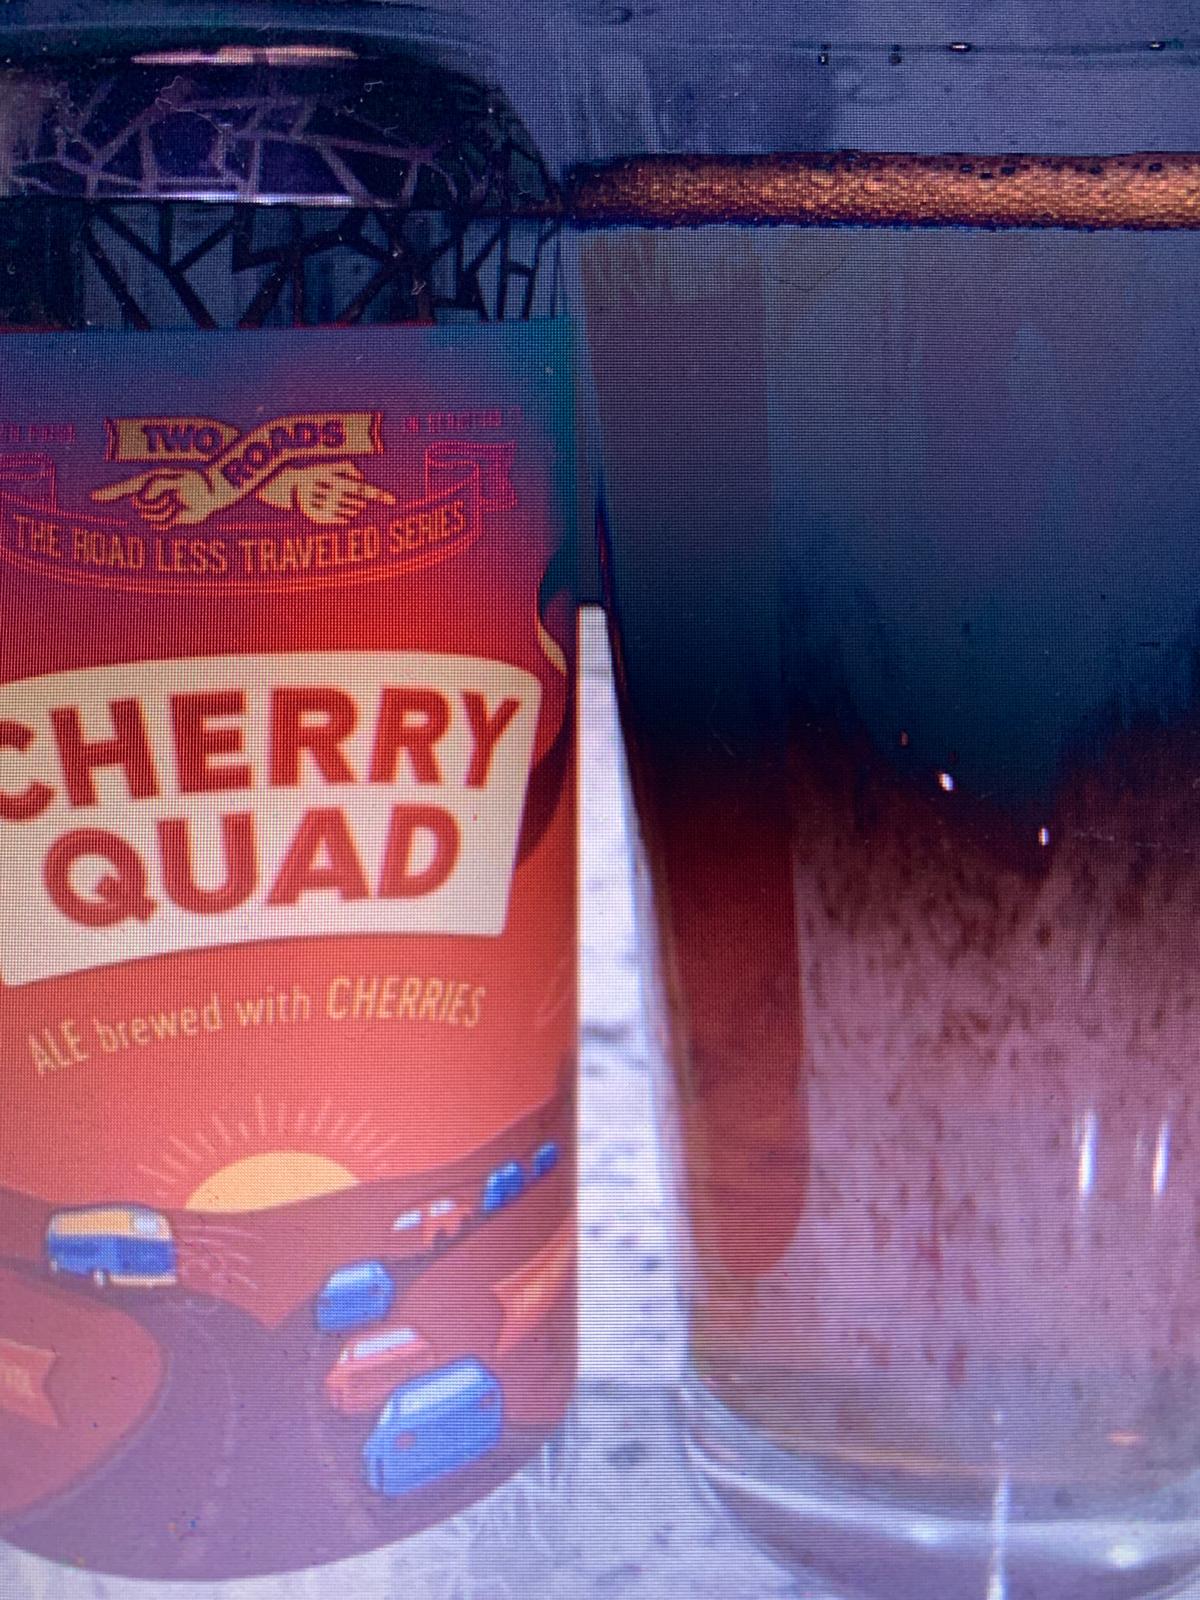 Cherry Quad